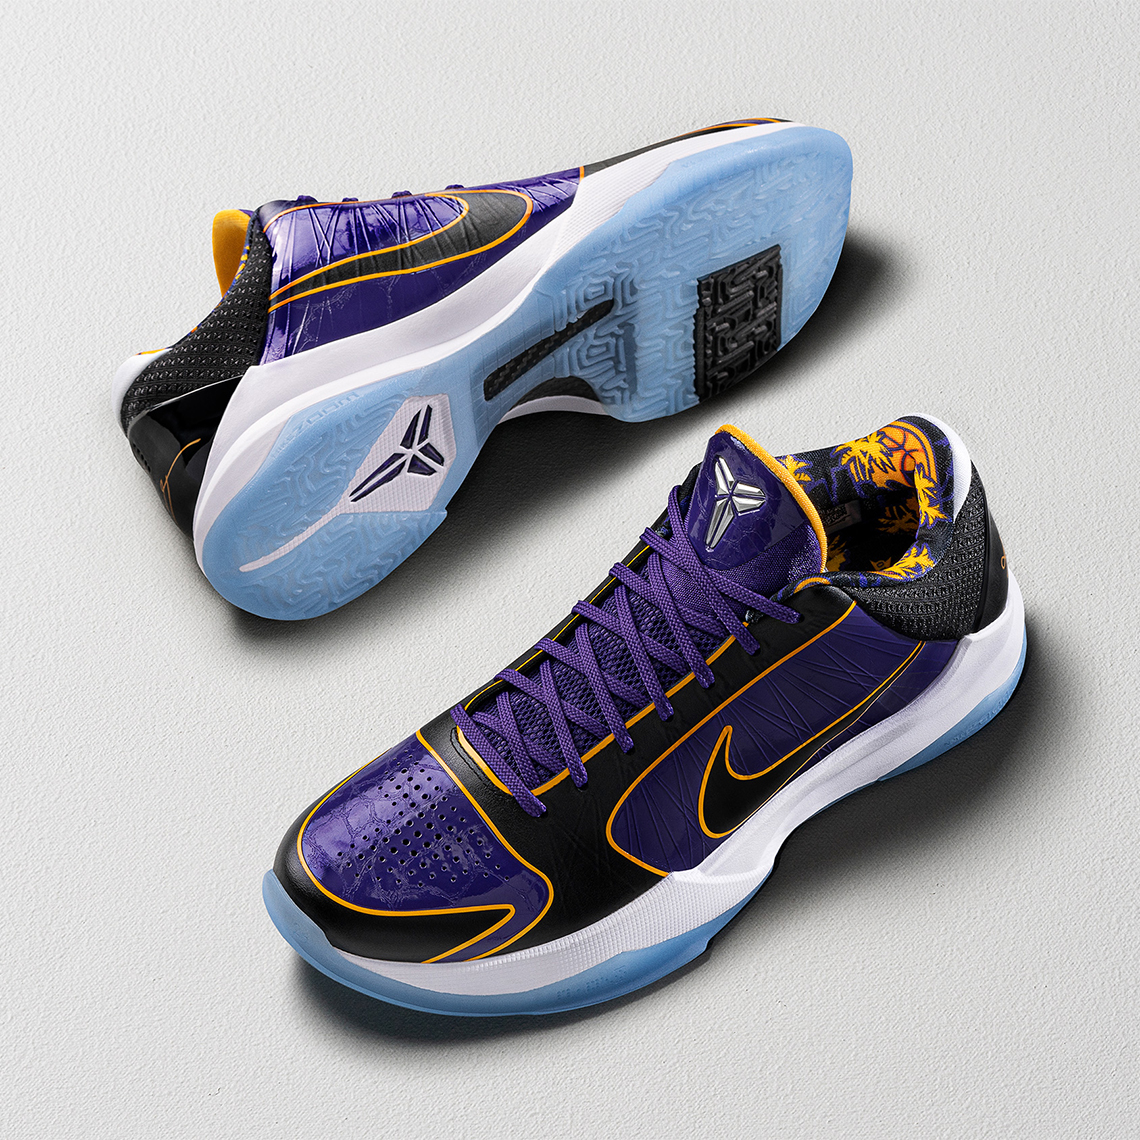 Where To Buy The Nike Kobe 5 Protro “5x Champ”